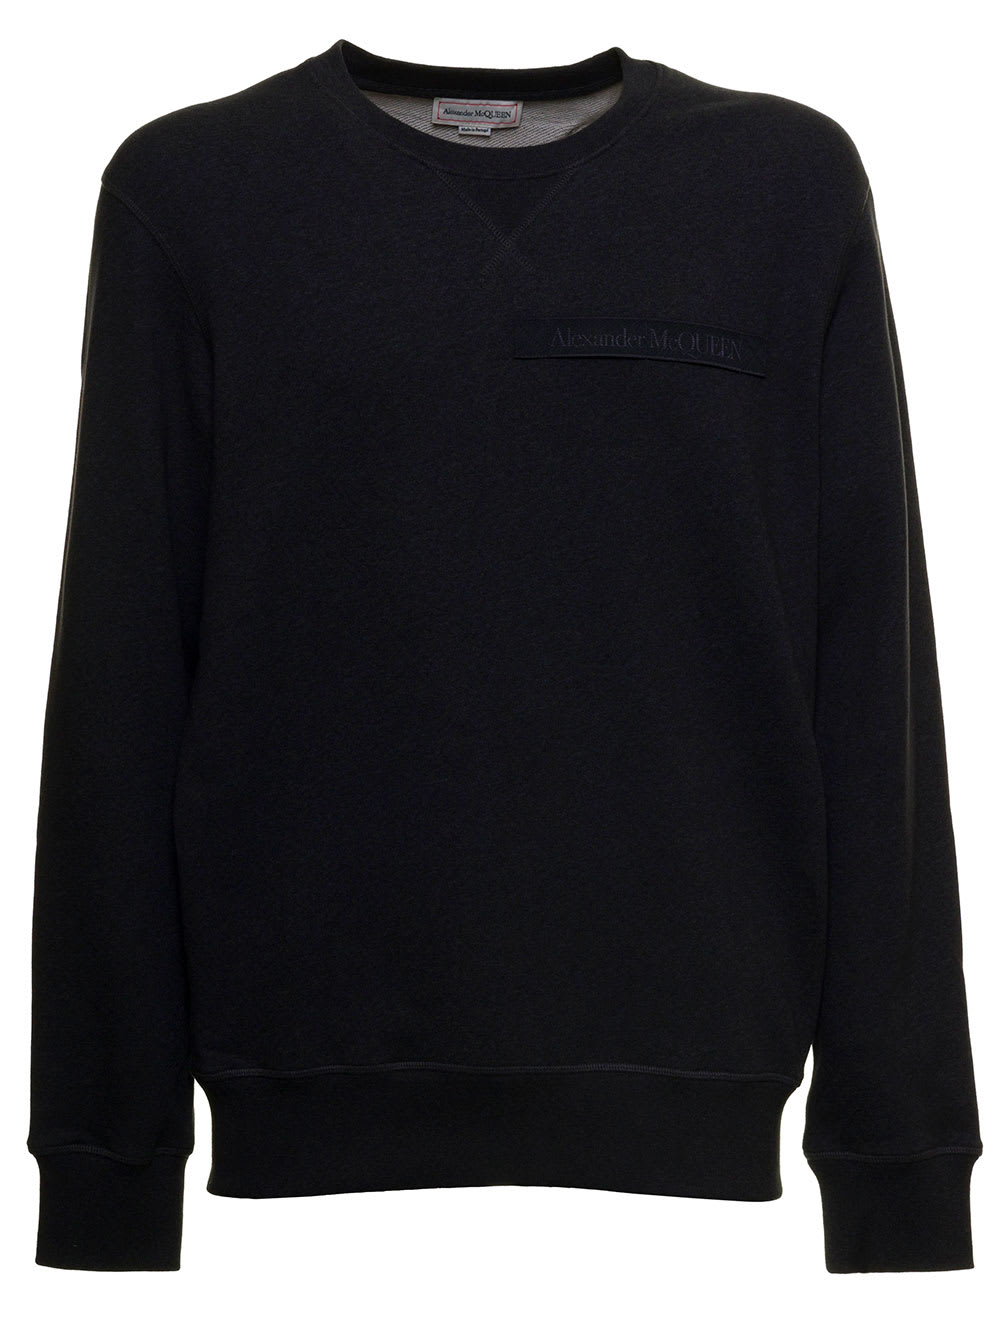 Alexander McQueen Black Cotton Sweater With Logo